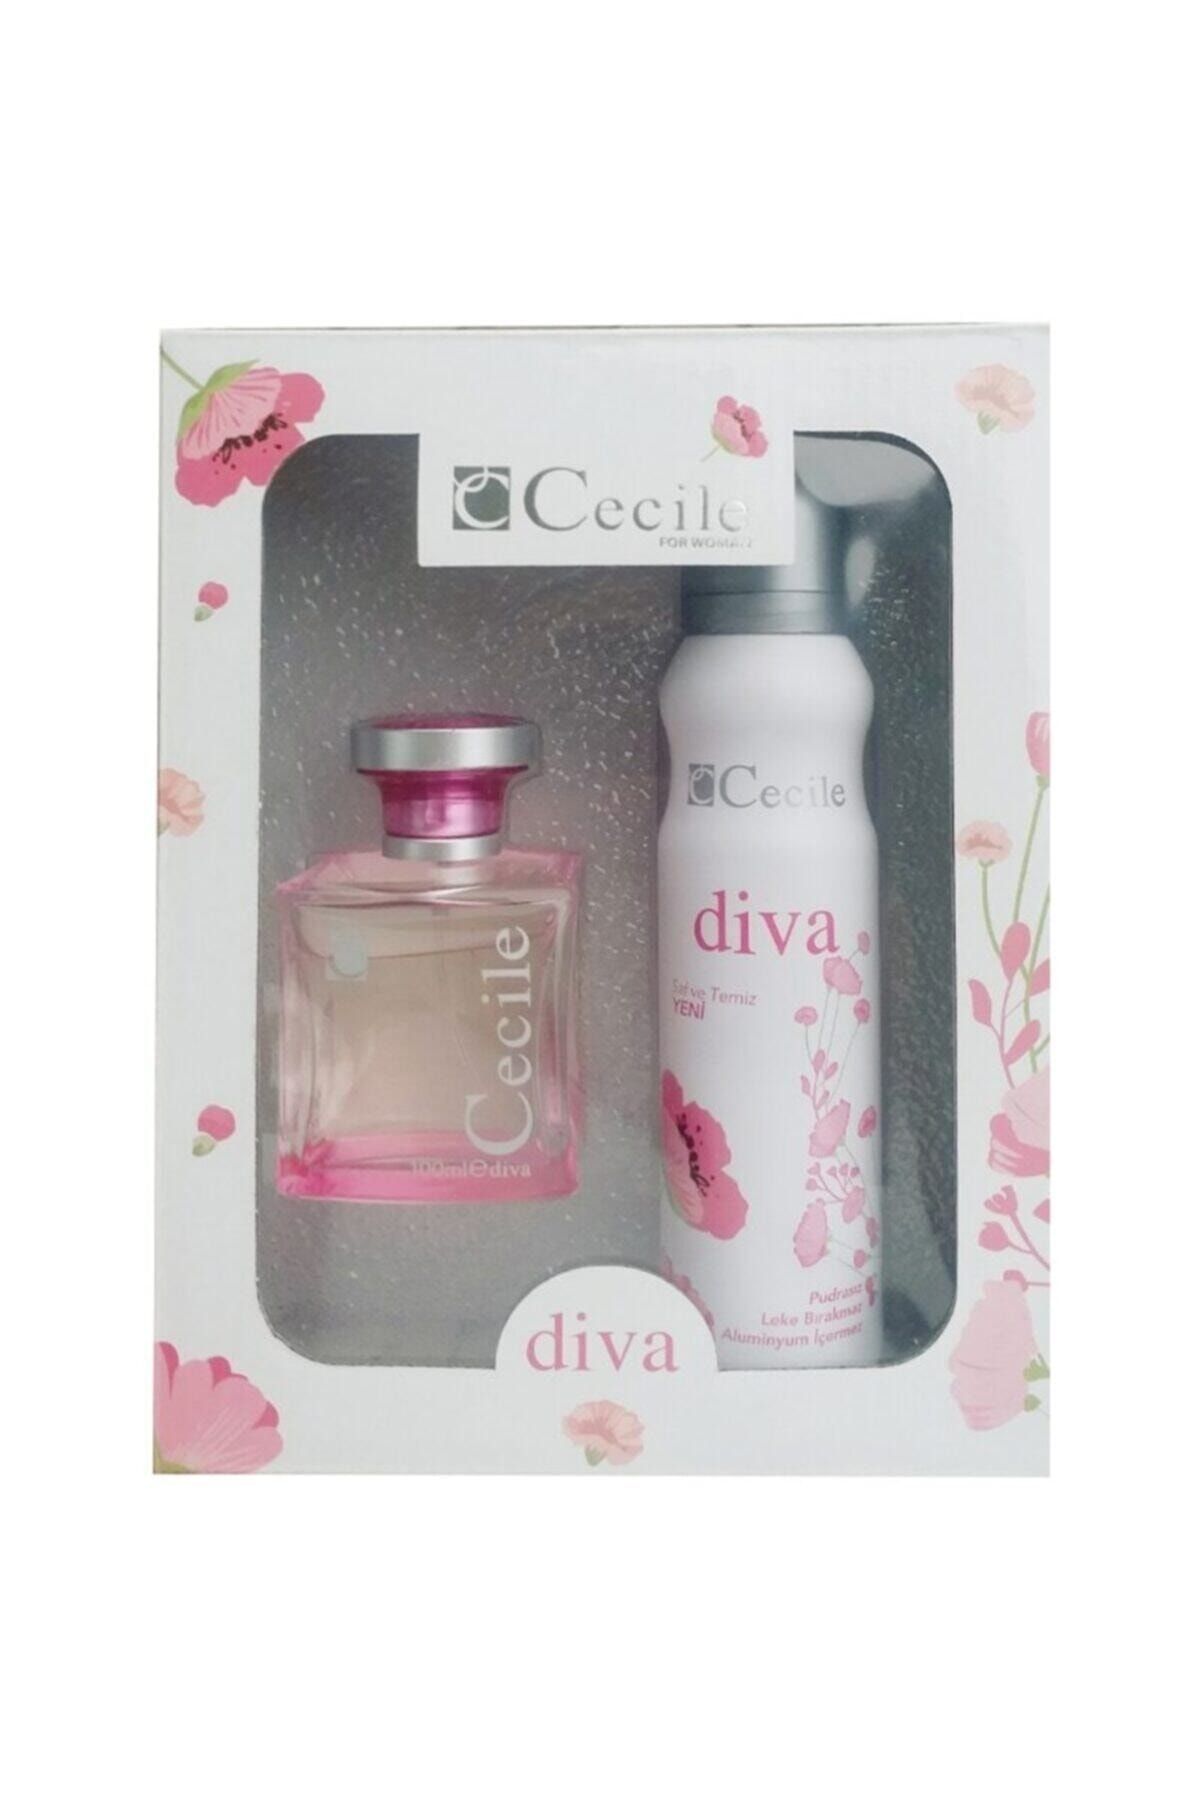 Cecile Kadın Diva Edt Parfüm 100 ml+ Deodorant 150 ml